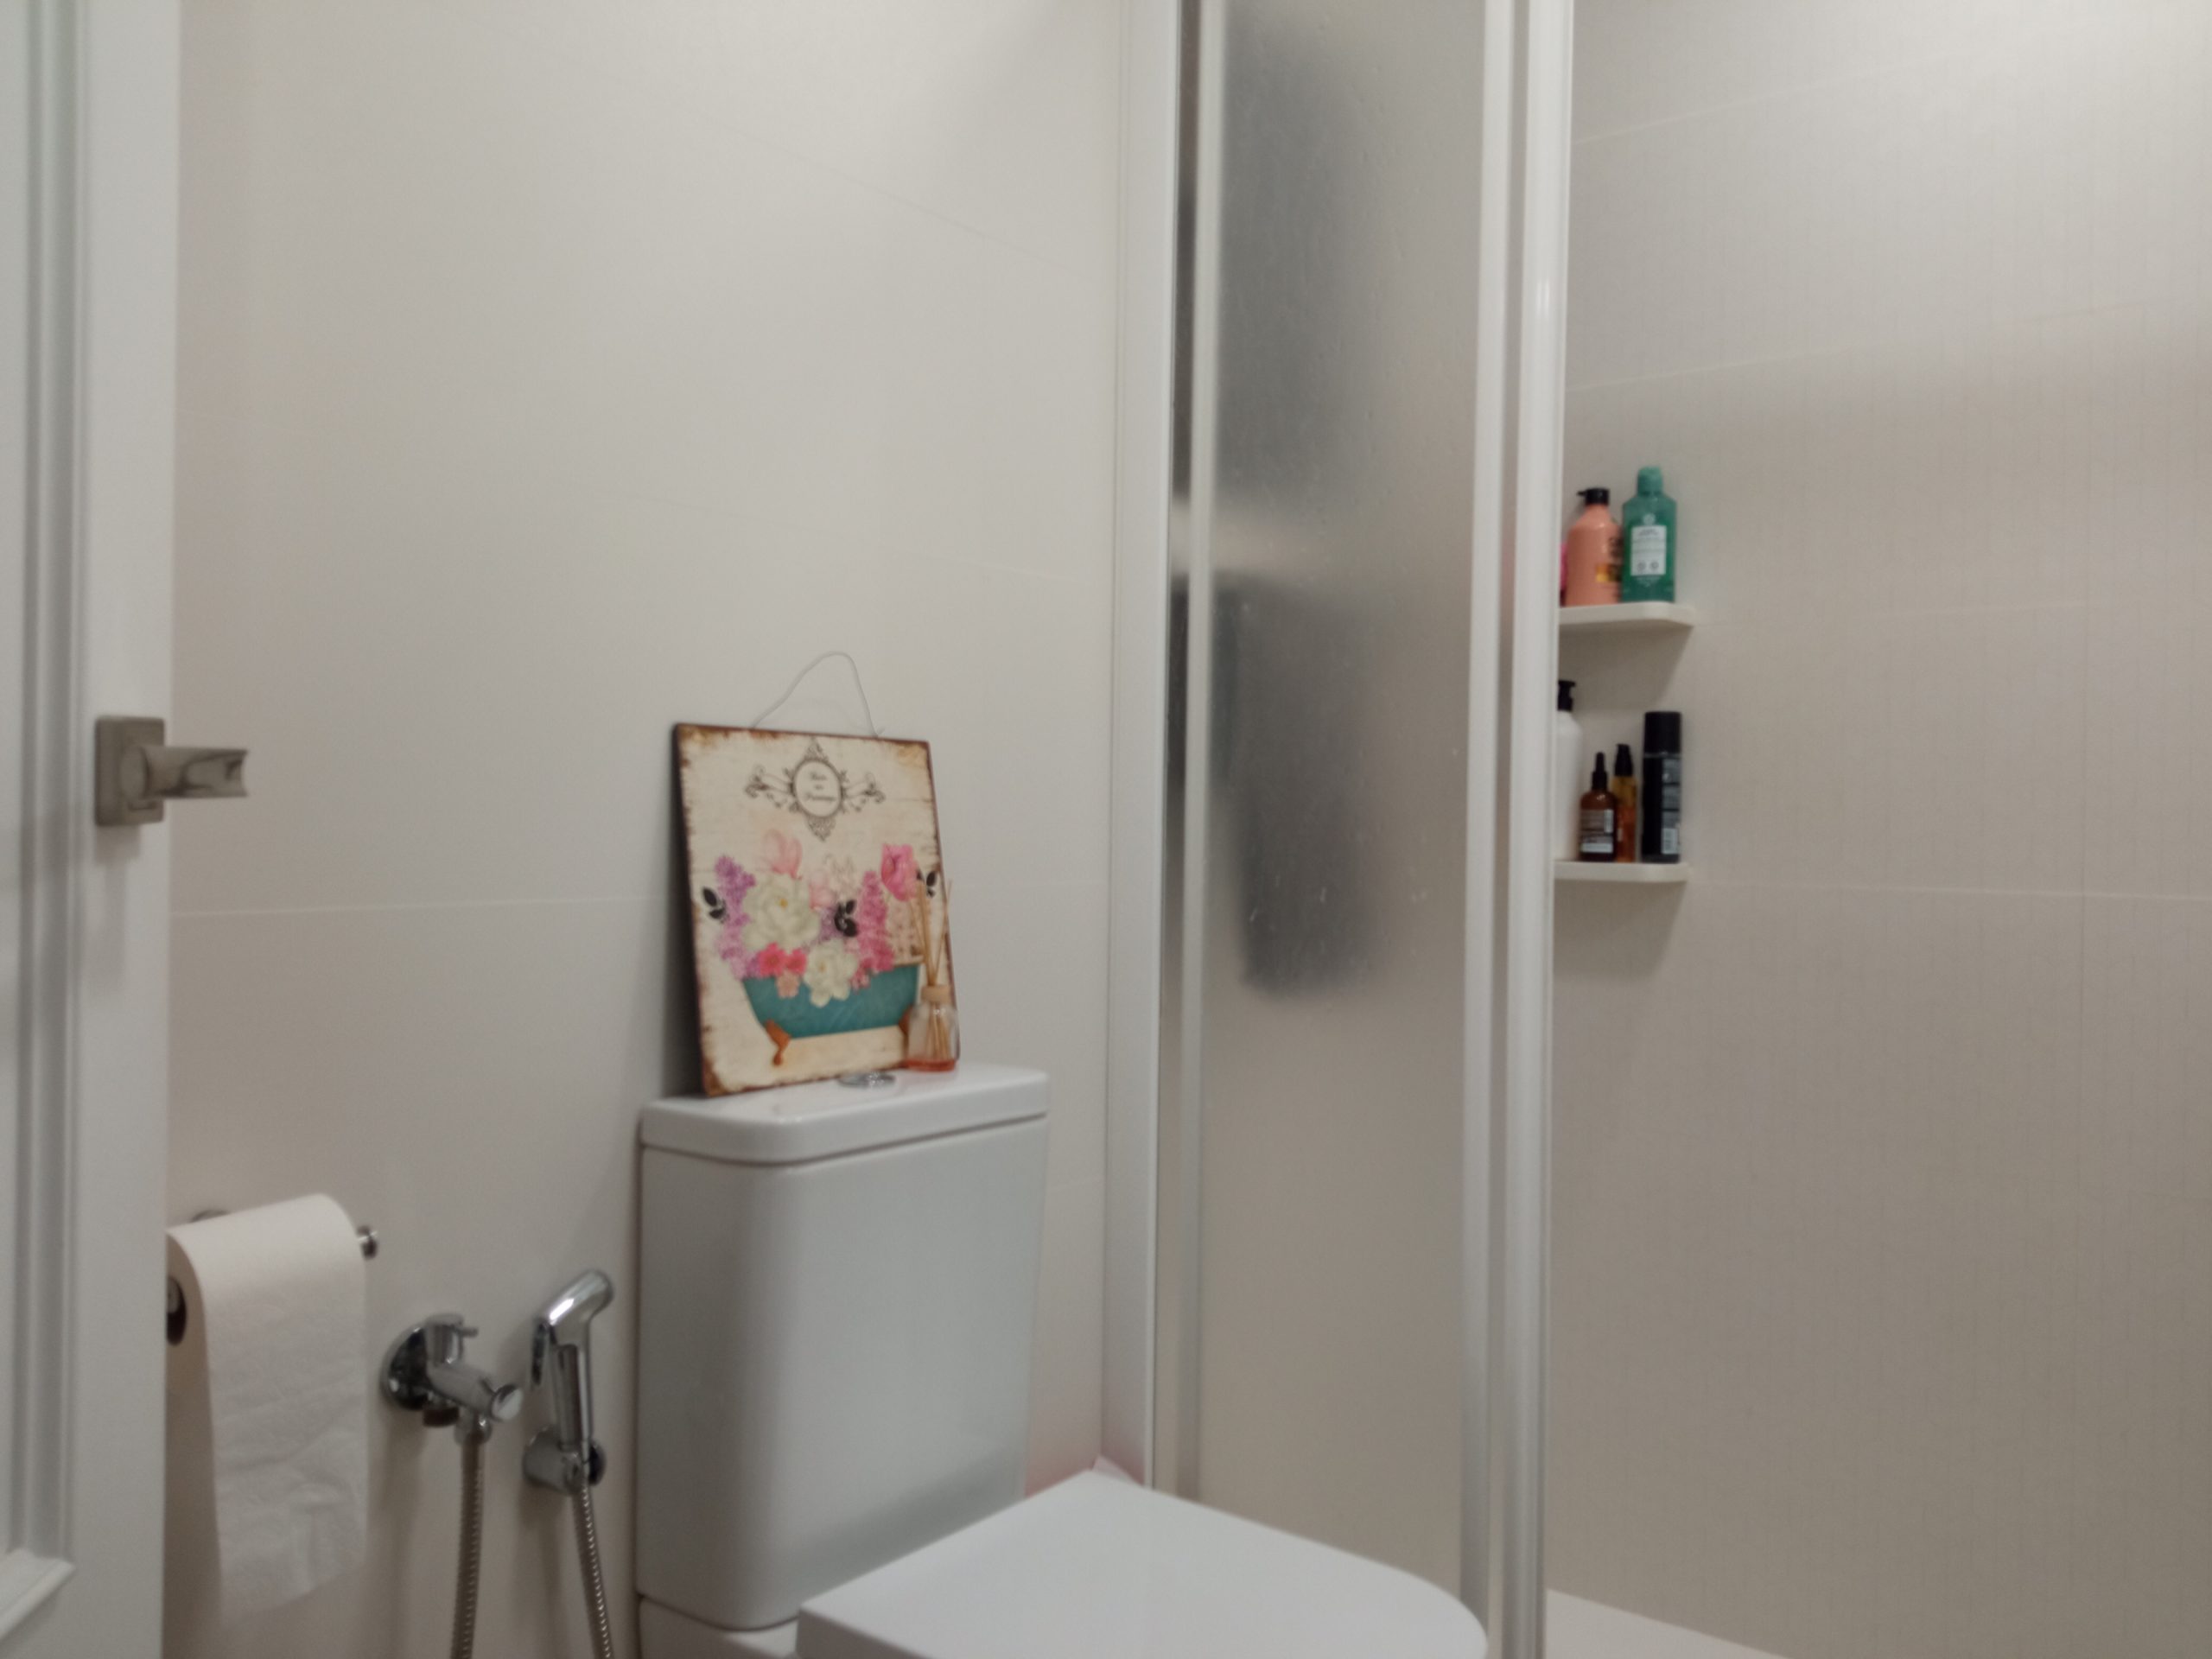 apartment for rent in valencia - bathroom